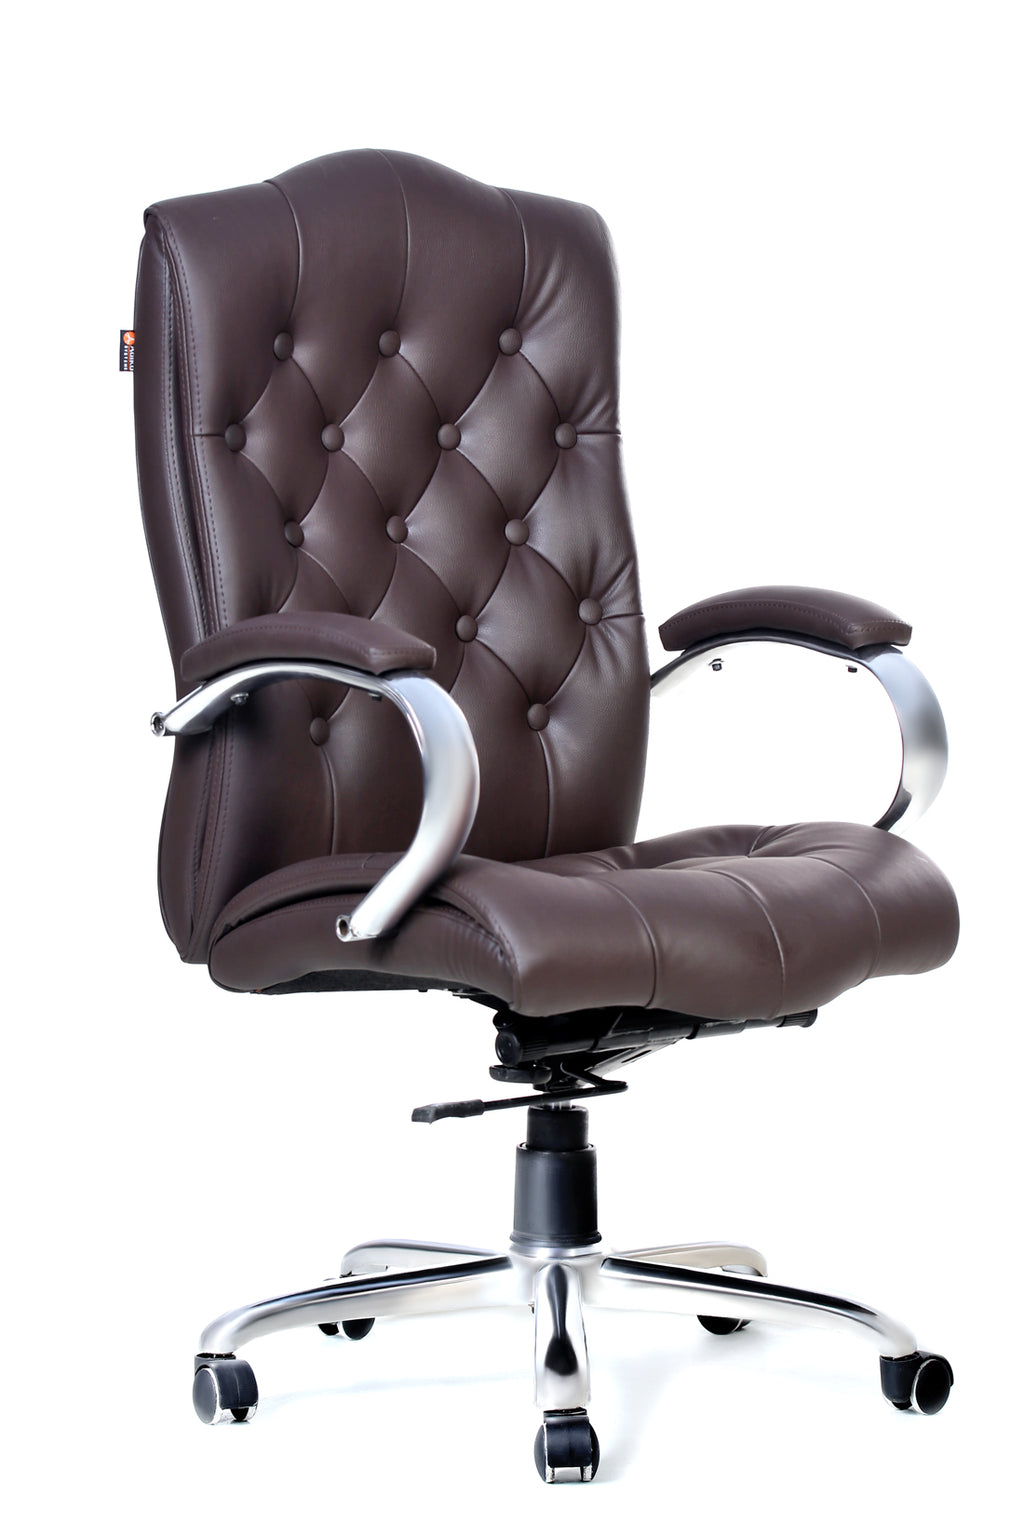 Detec™ Adiko Director Office Chair In Brown Color